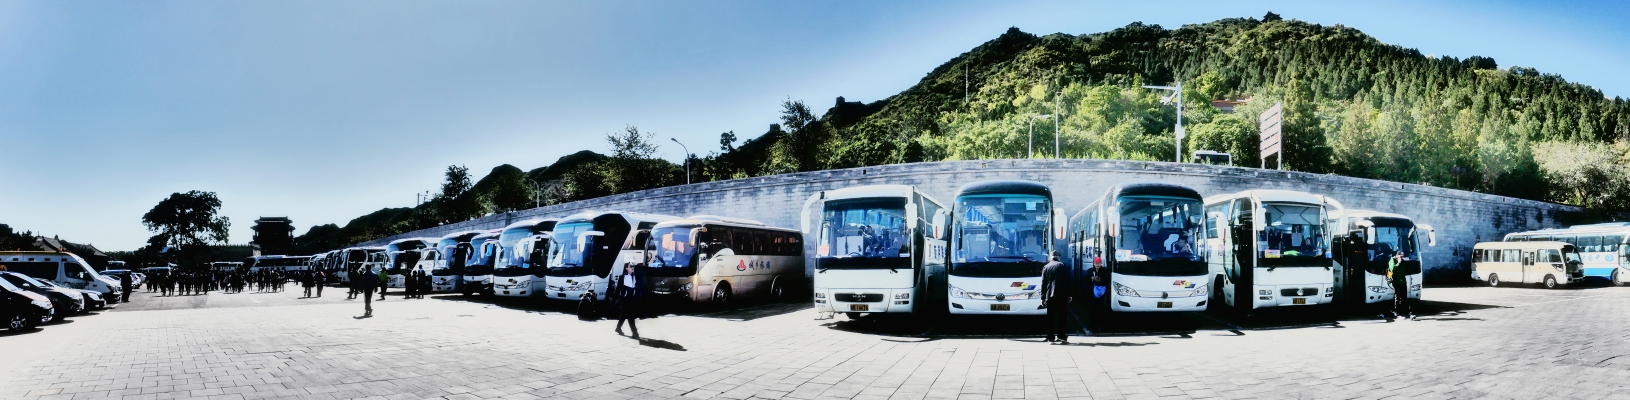 Great Wall Bus Park.jpg